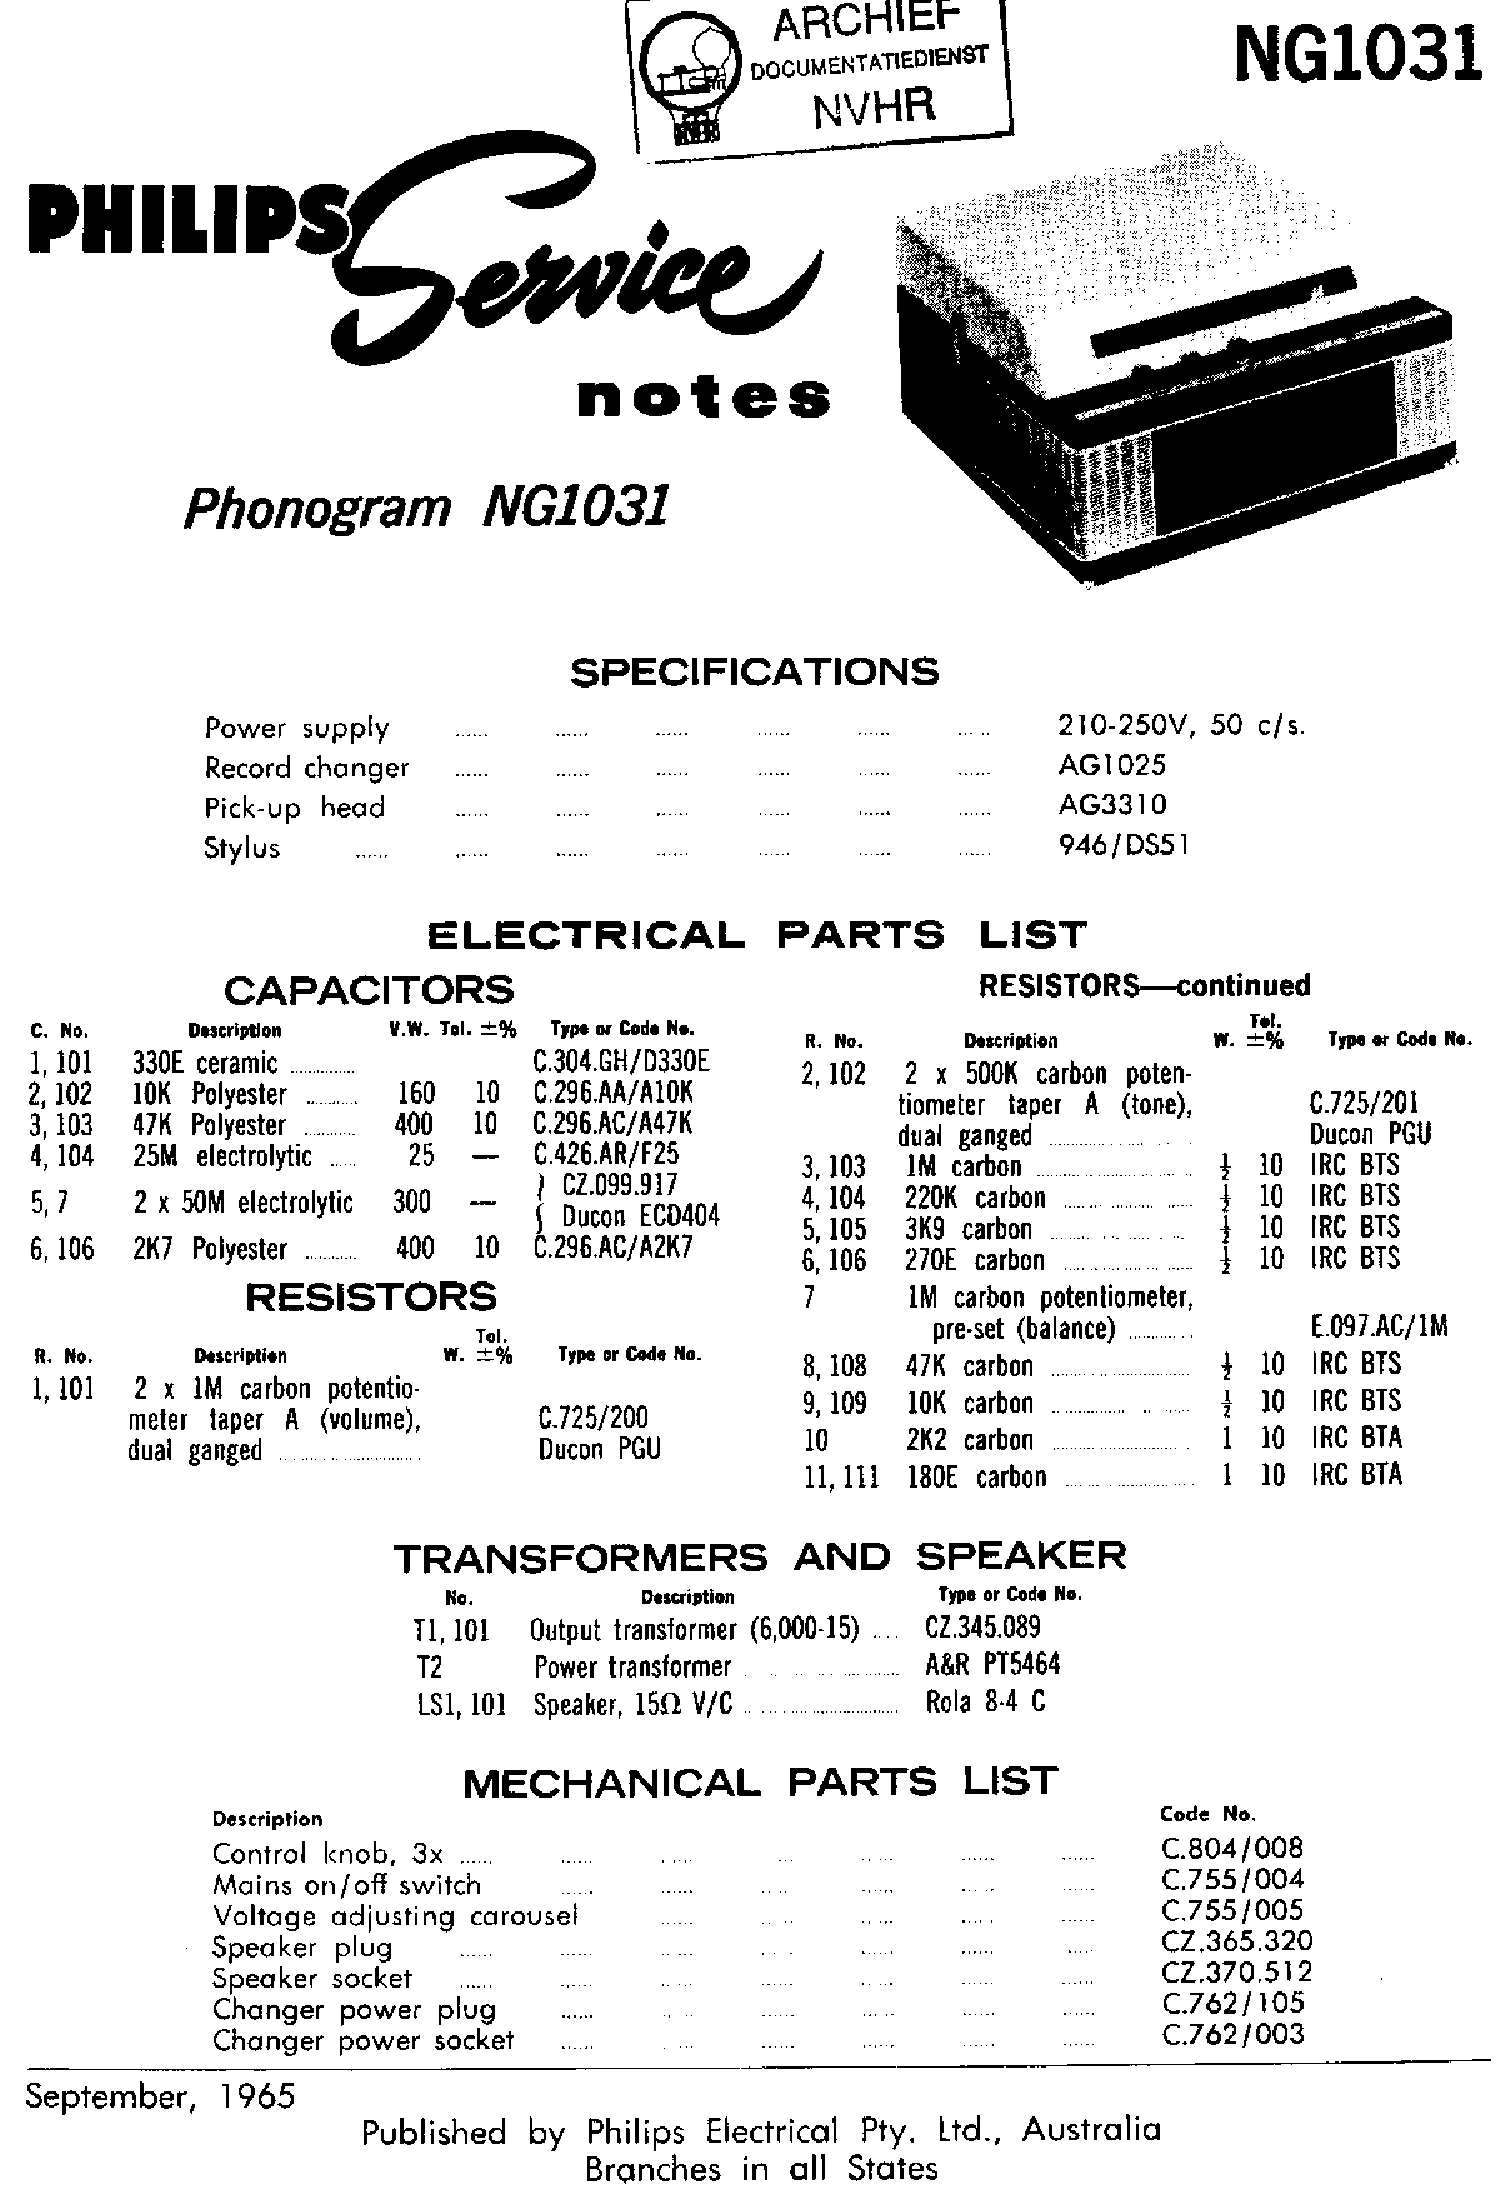 PHILIPS NG1031 TRANSPORTABLE PHONOGRAMM 1965 SM service manual (1st page)